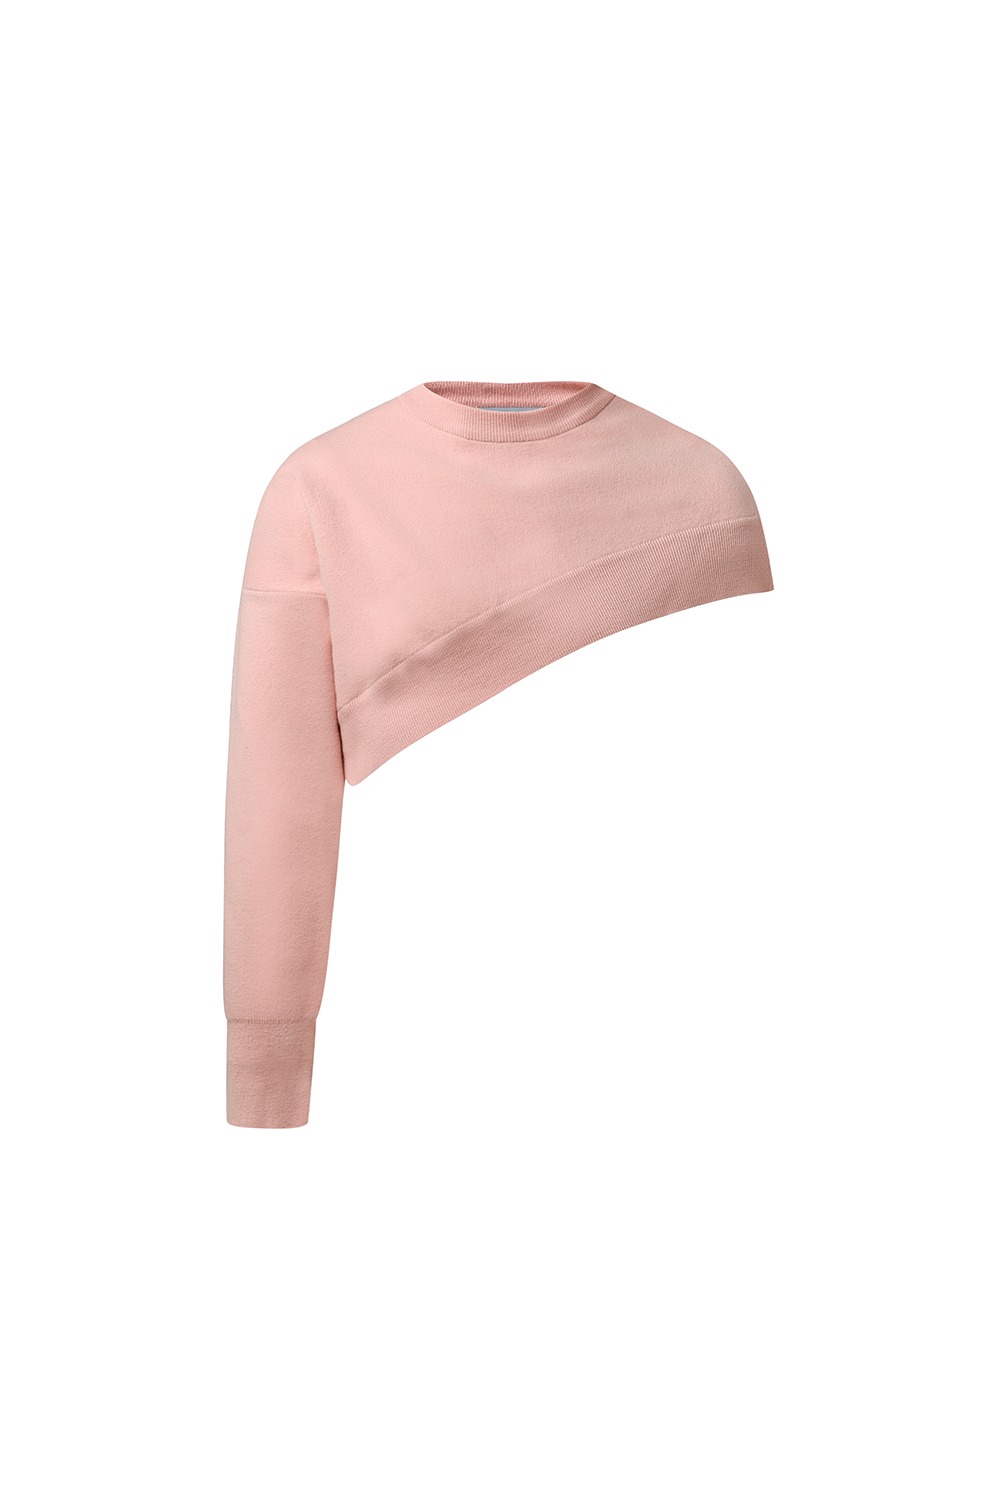 [UN] Diagonal crop knit - Pink